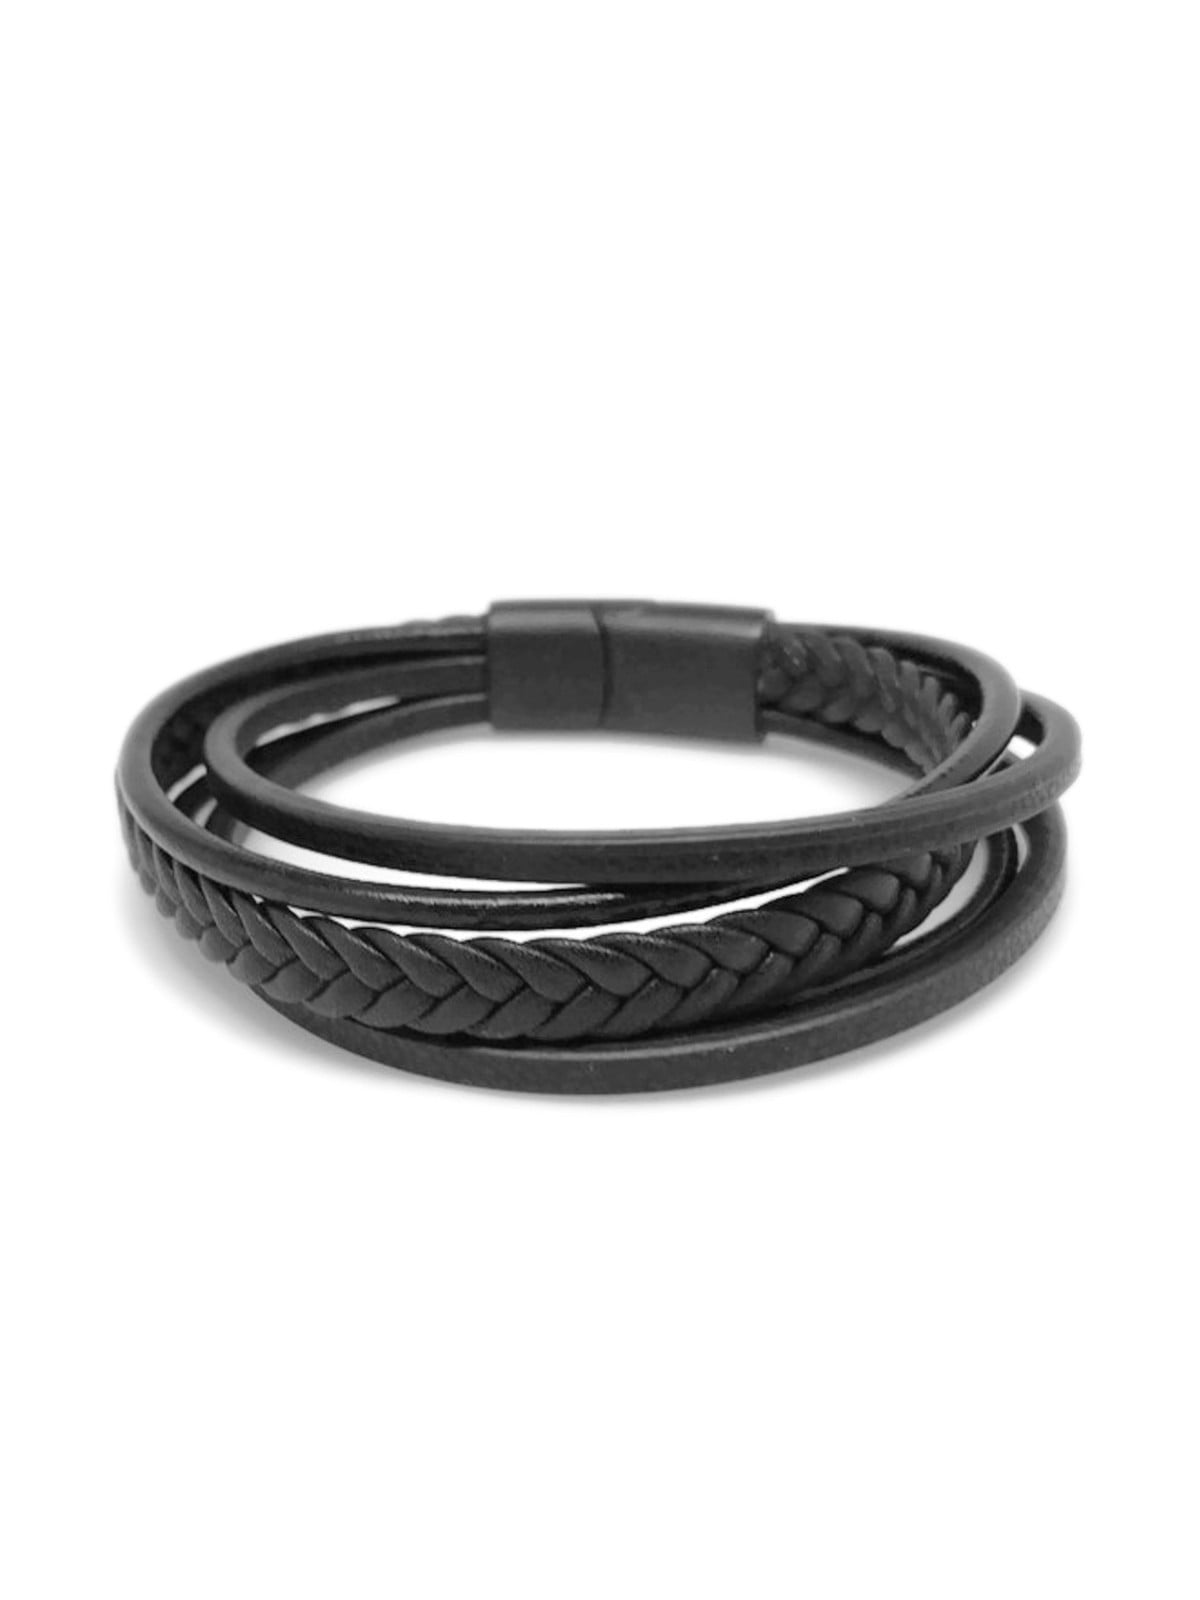 7 Layers Cuff Black/Brown Leather Braided Wristband Bracelet Bangle 